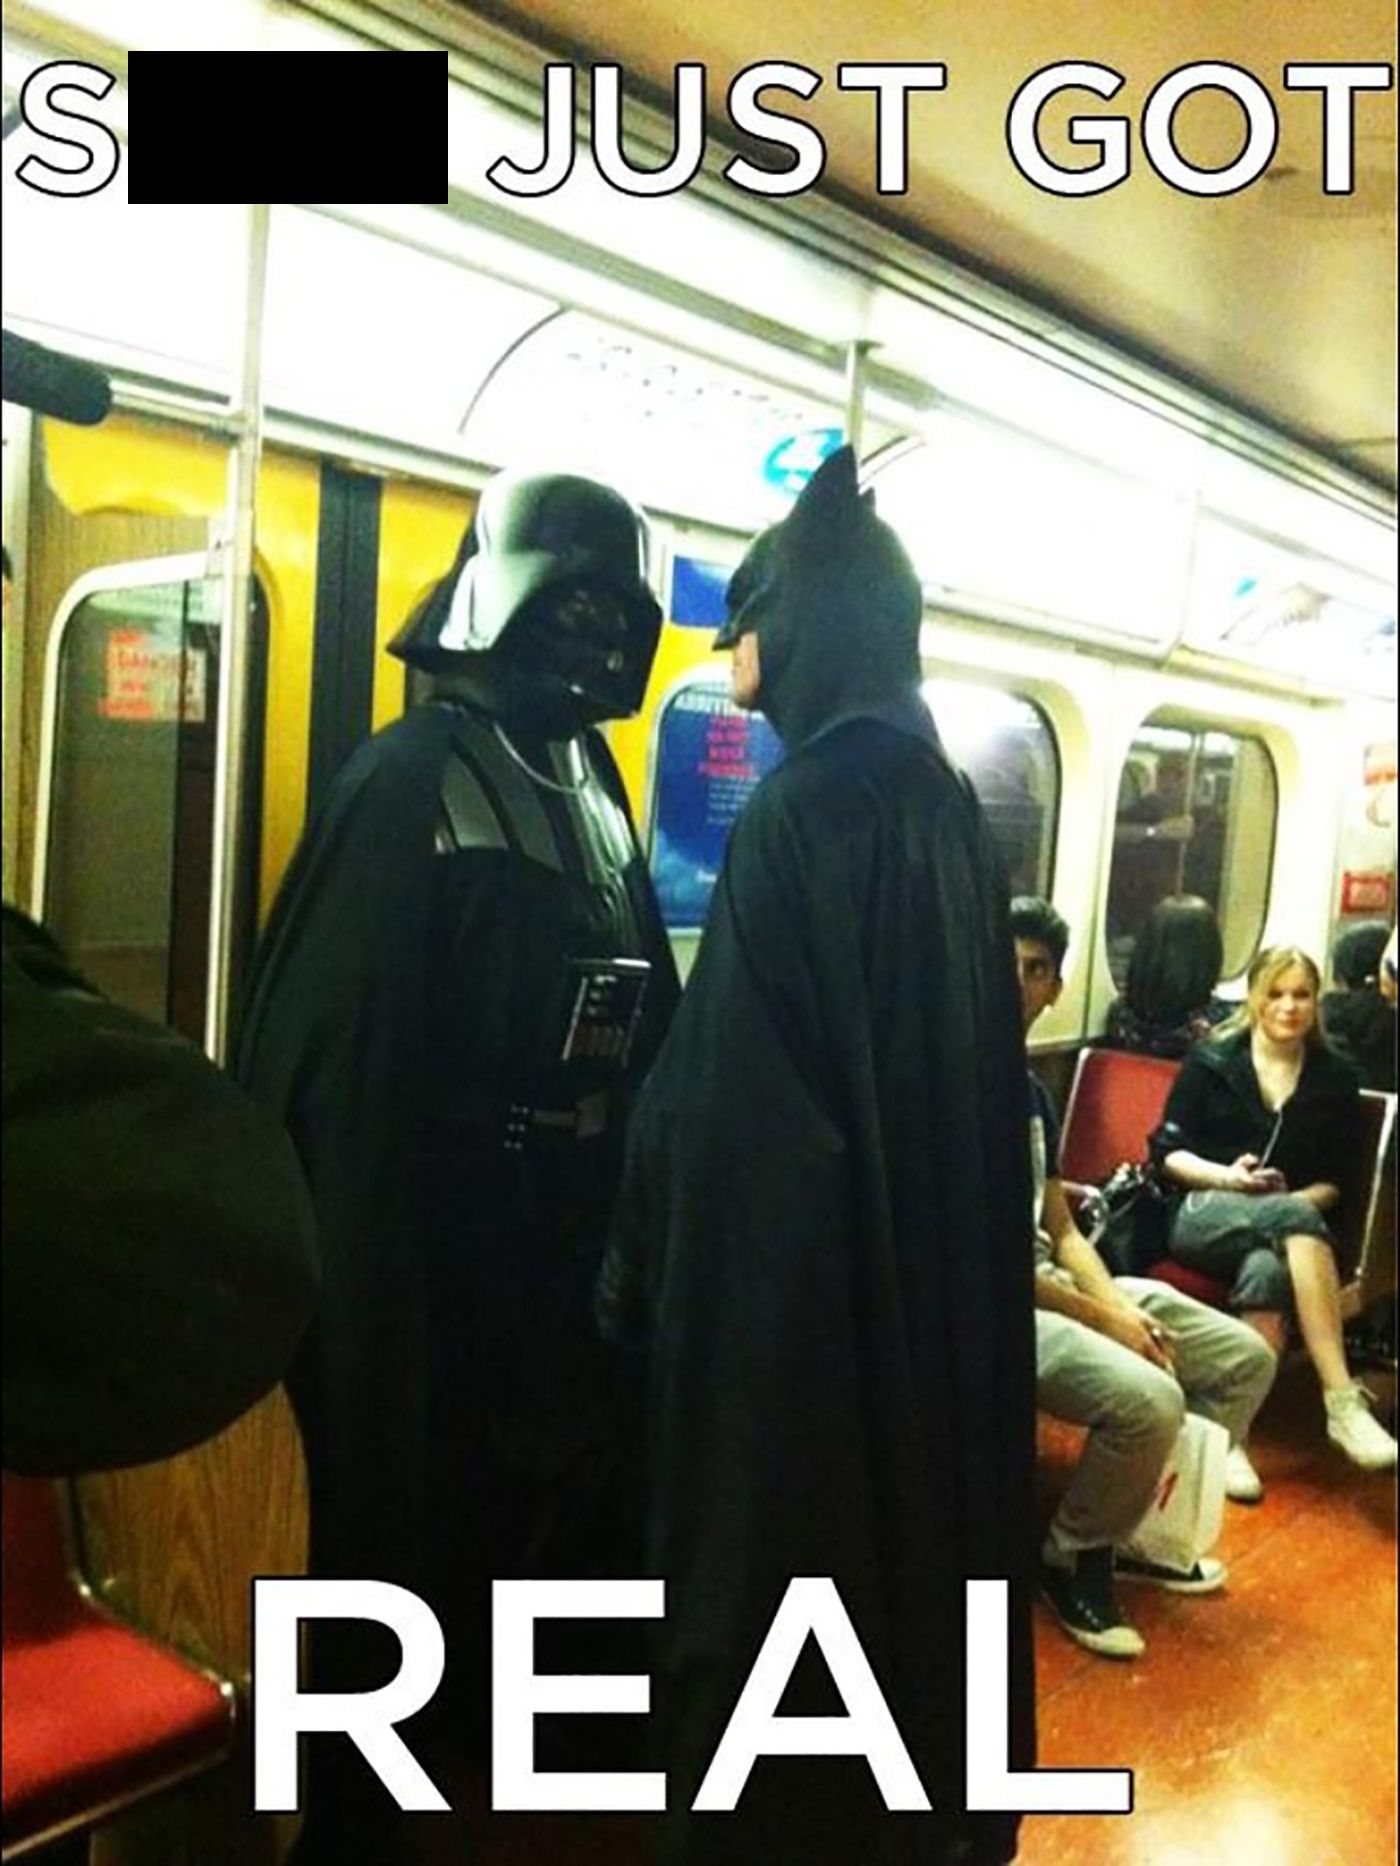 Batman vs. Vader Meme